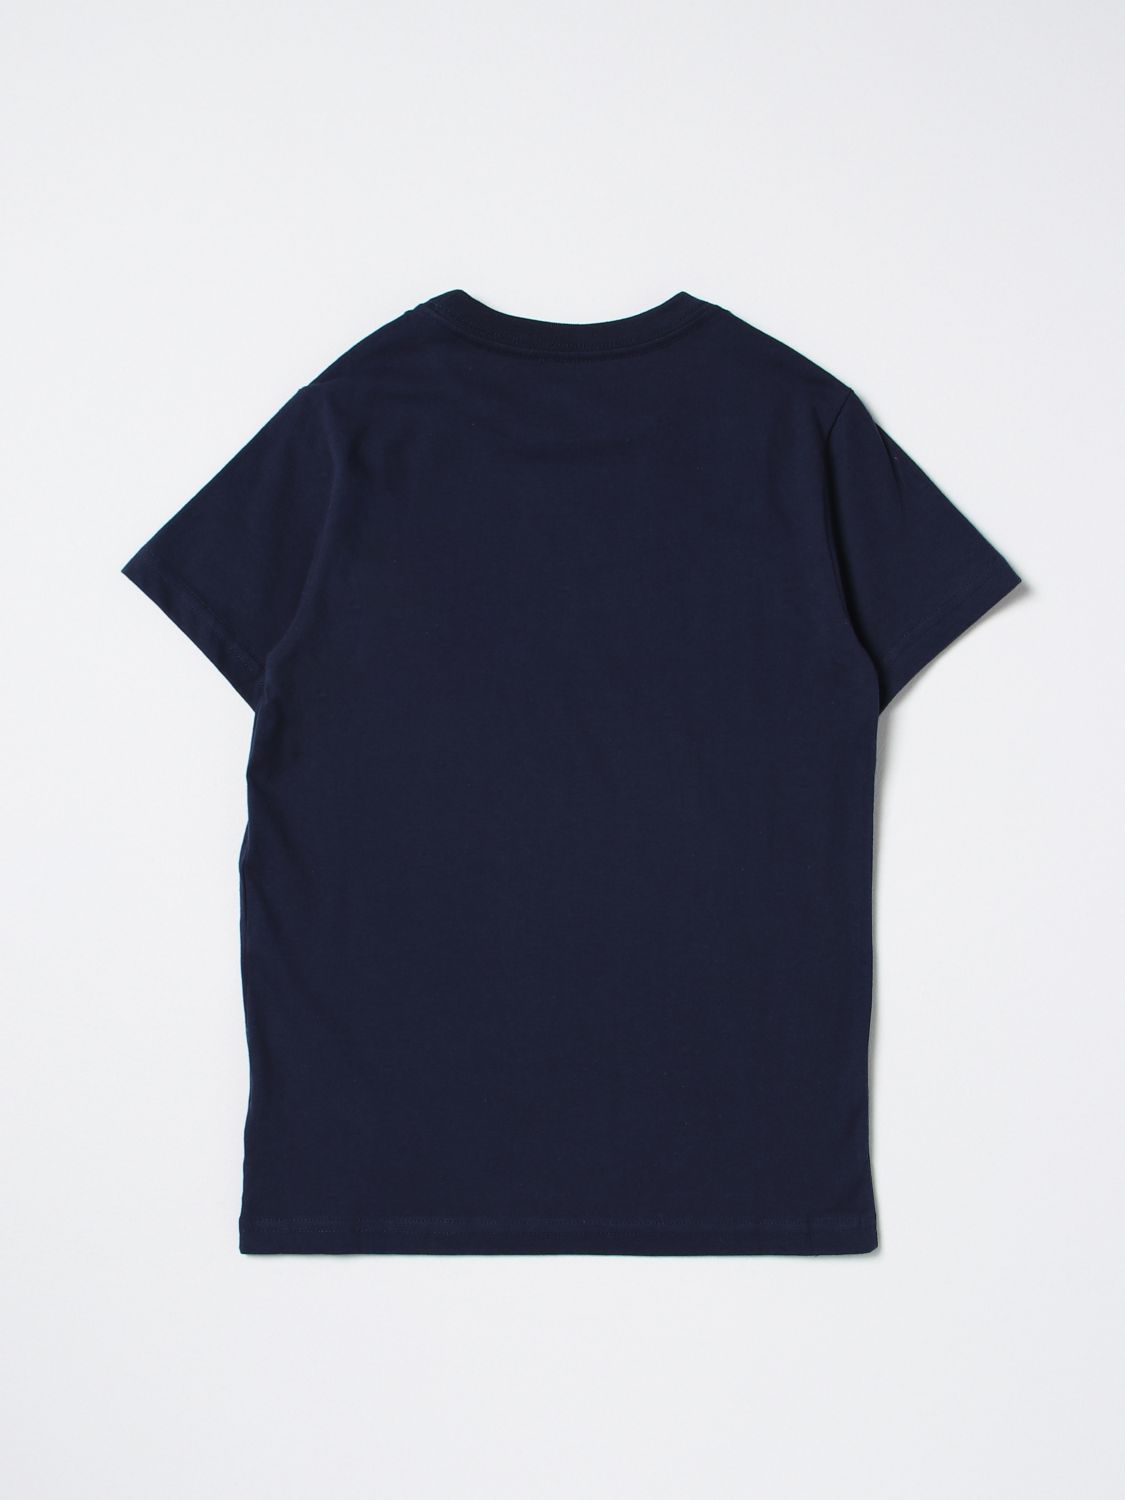 POLO RALPH LAUREN: t-shirt for boys - Navy | Polo Ralph Lauren t-shirt ...